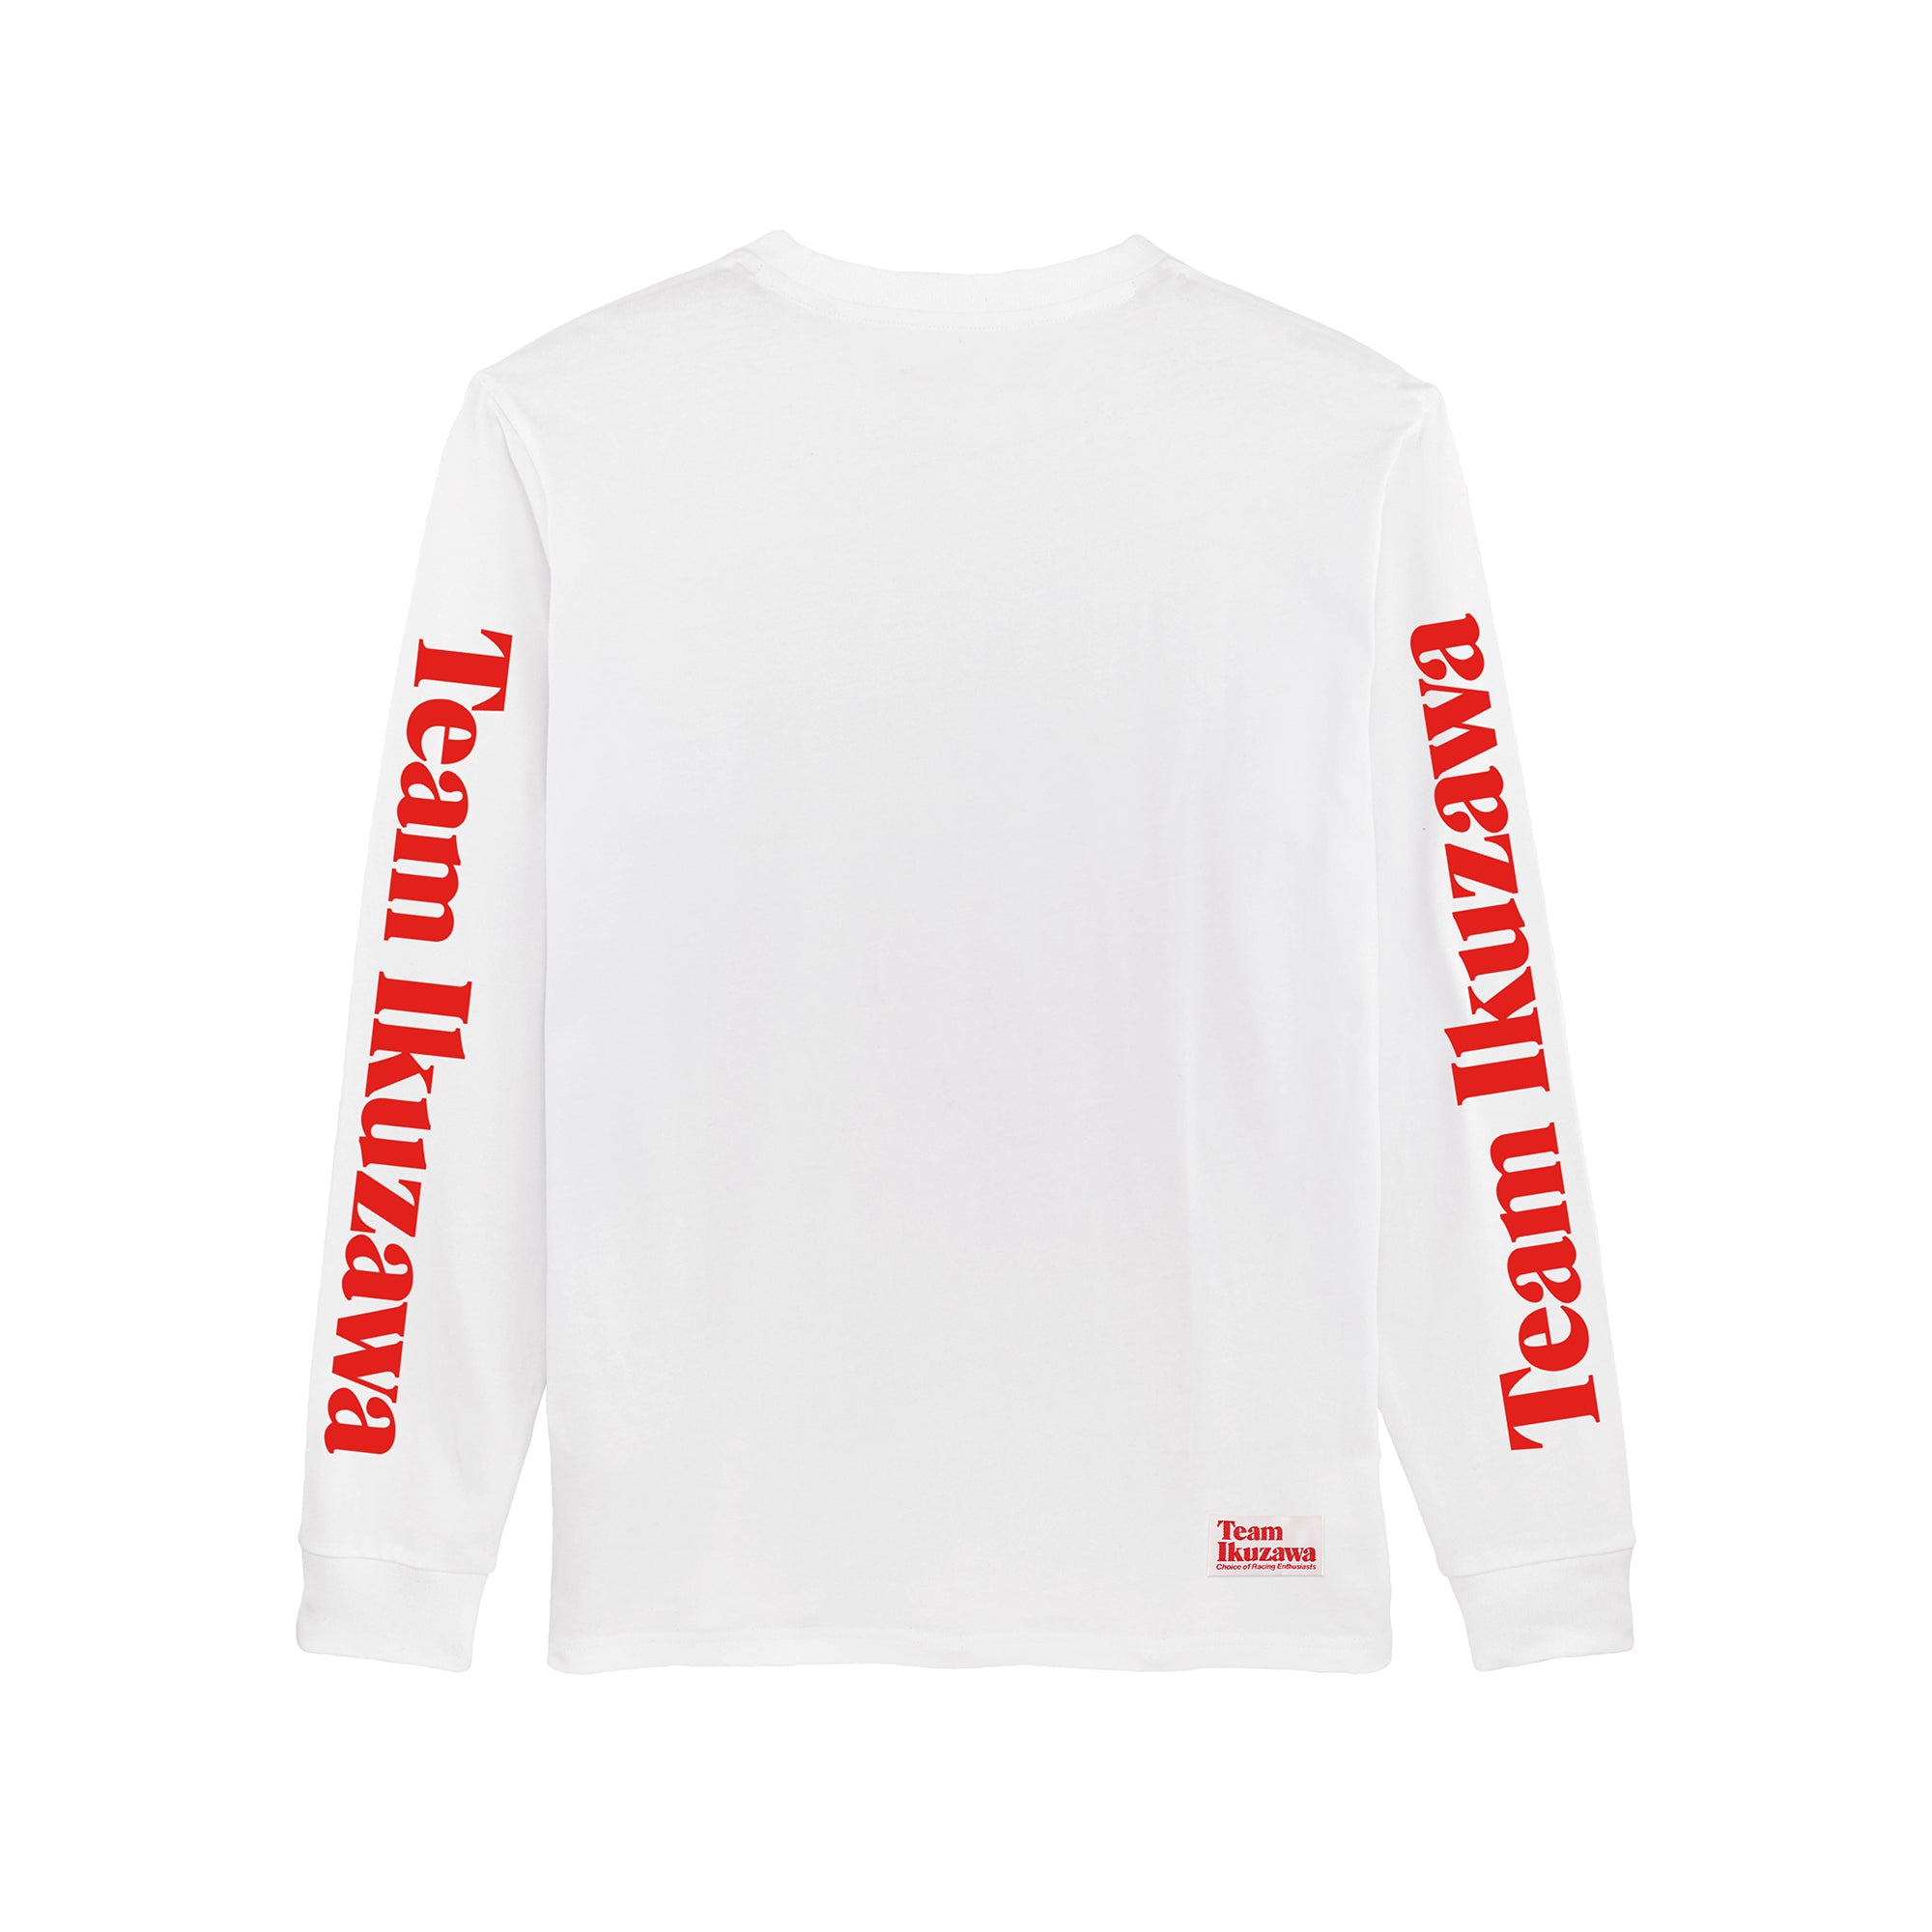 Team Ikuzawa Organic Cotton Long-sleeve T-shirt